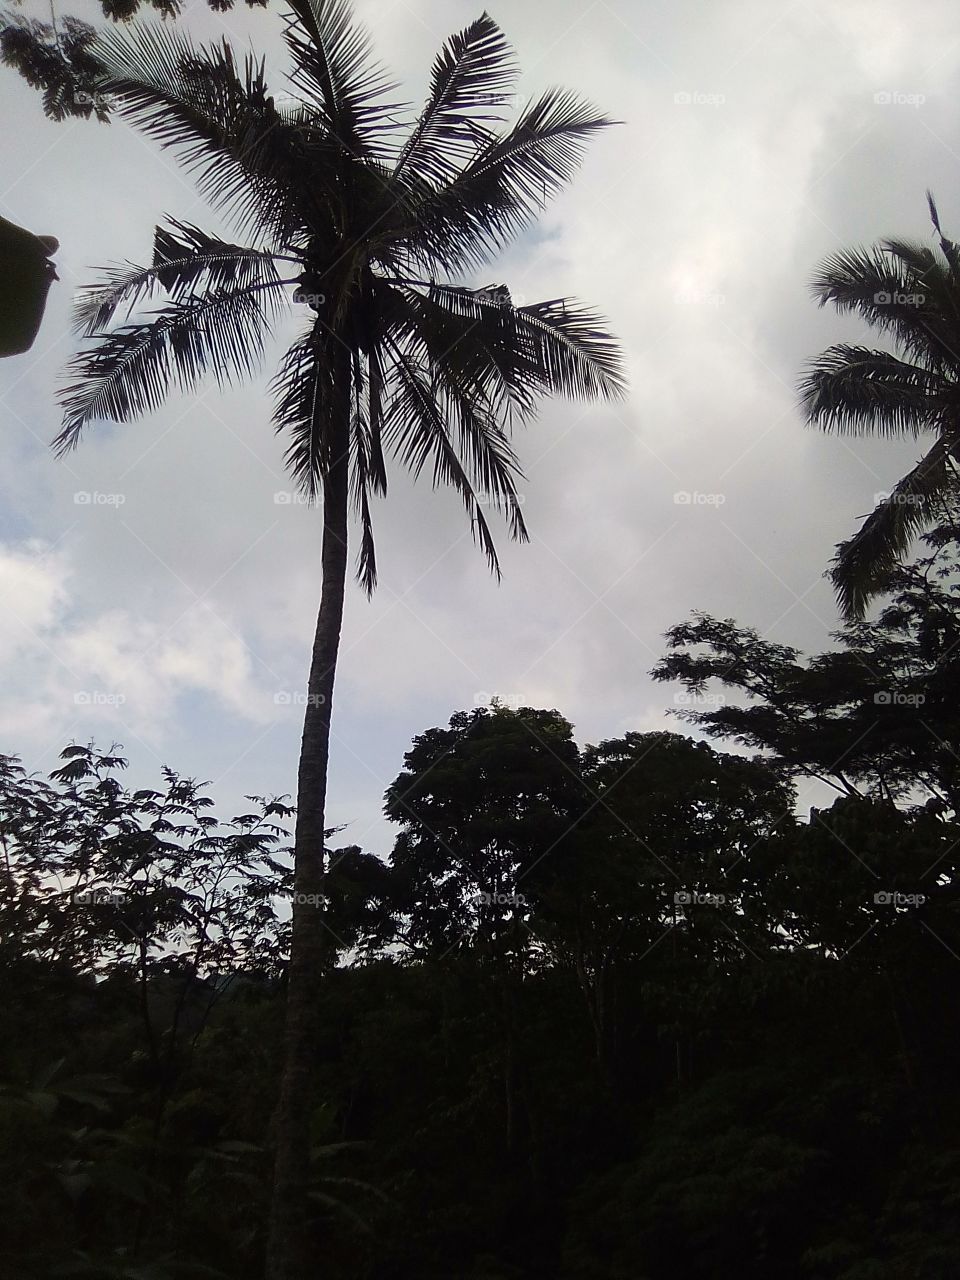 pohon kelapa